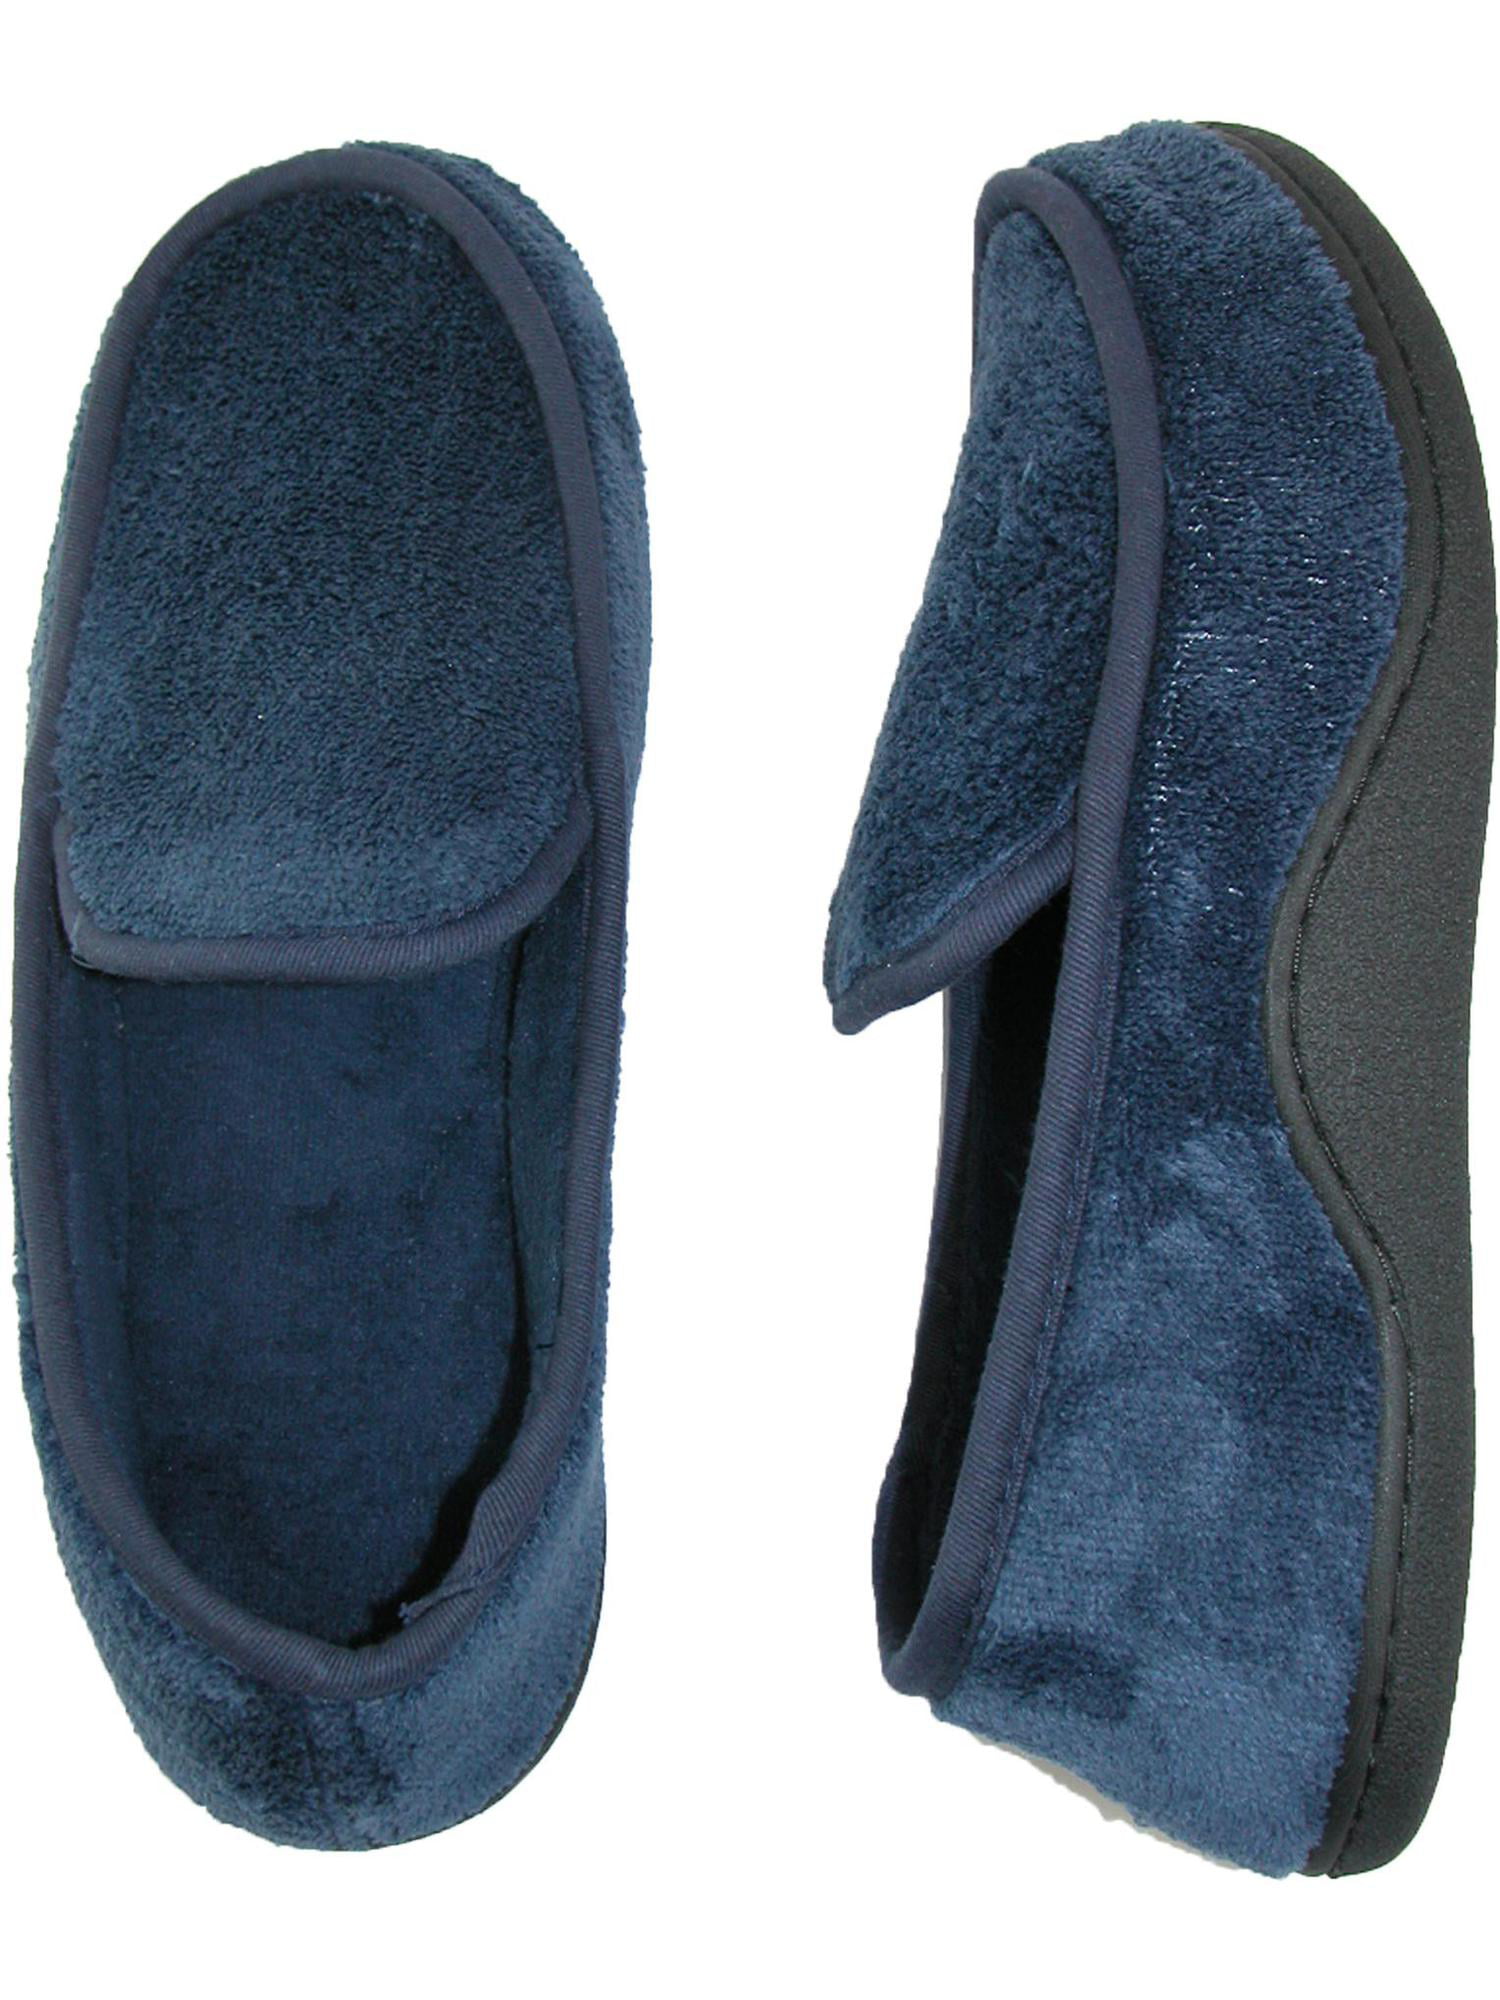 Isotoner Men's Microsuede Moccasin Memory Foam Slippers Shoes for Indoor/Outdoor 